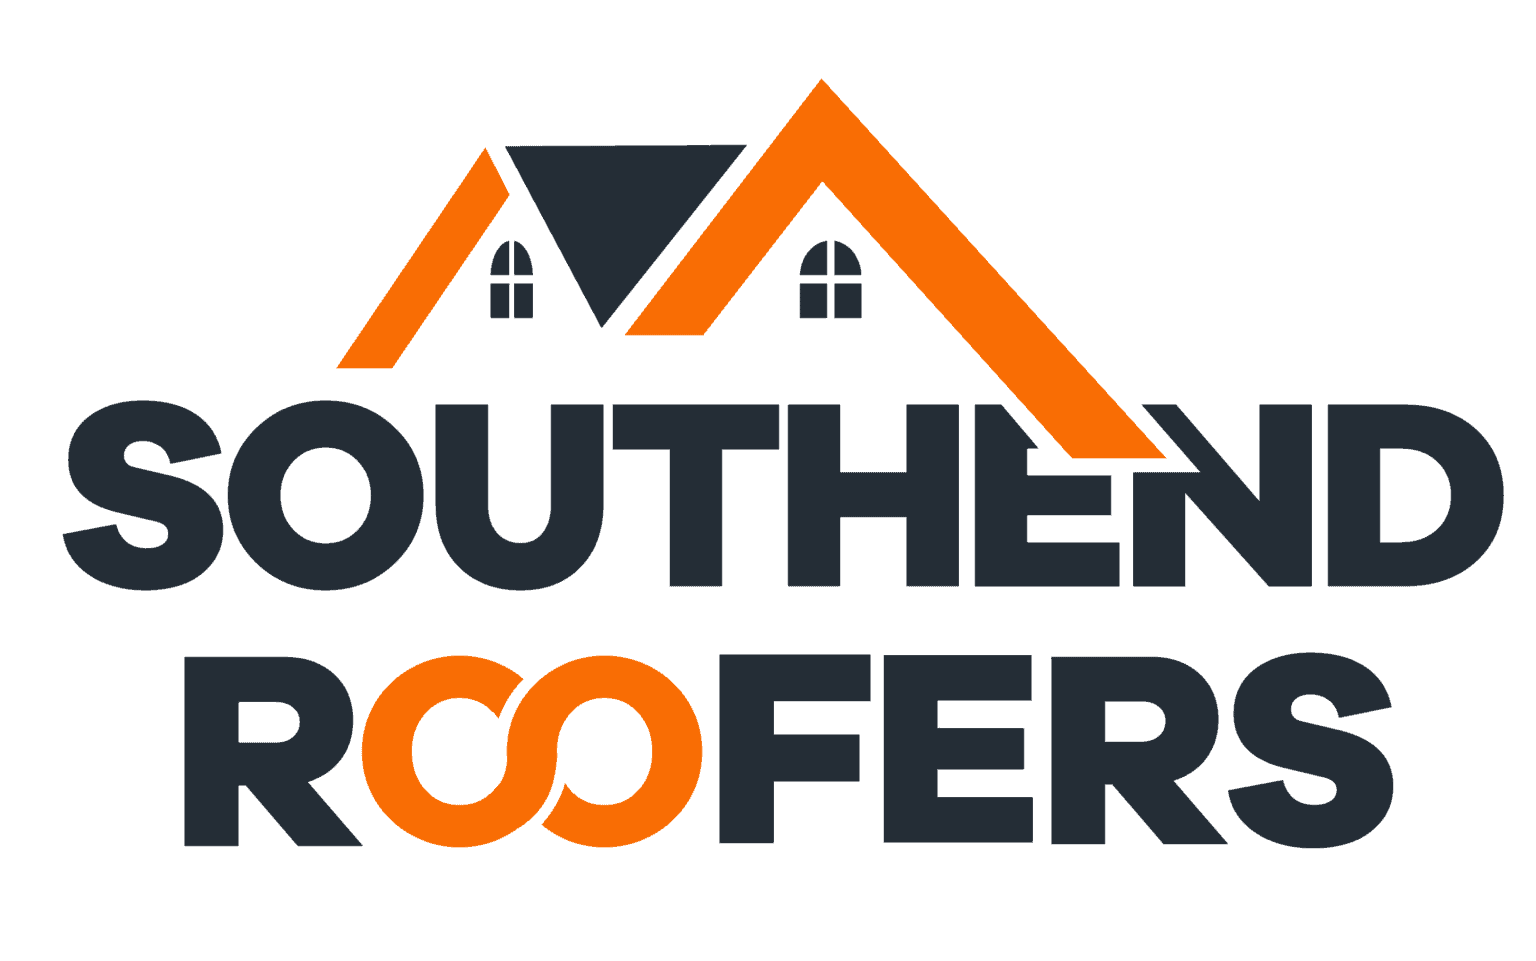 Southend Roofers logo